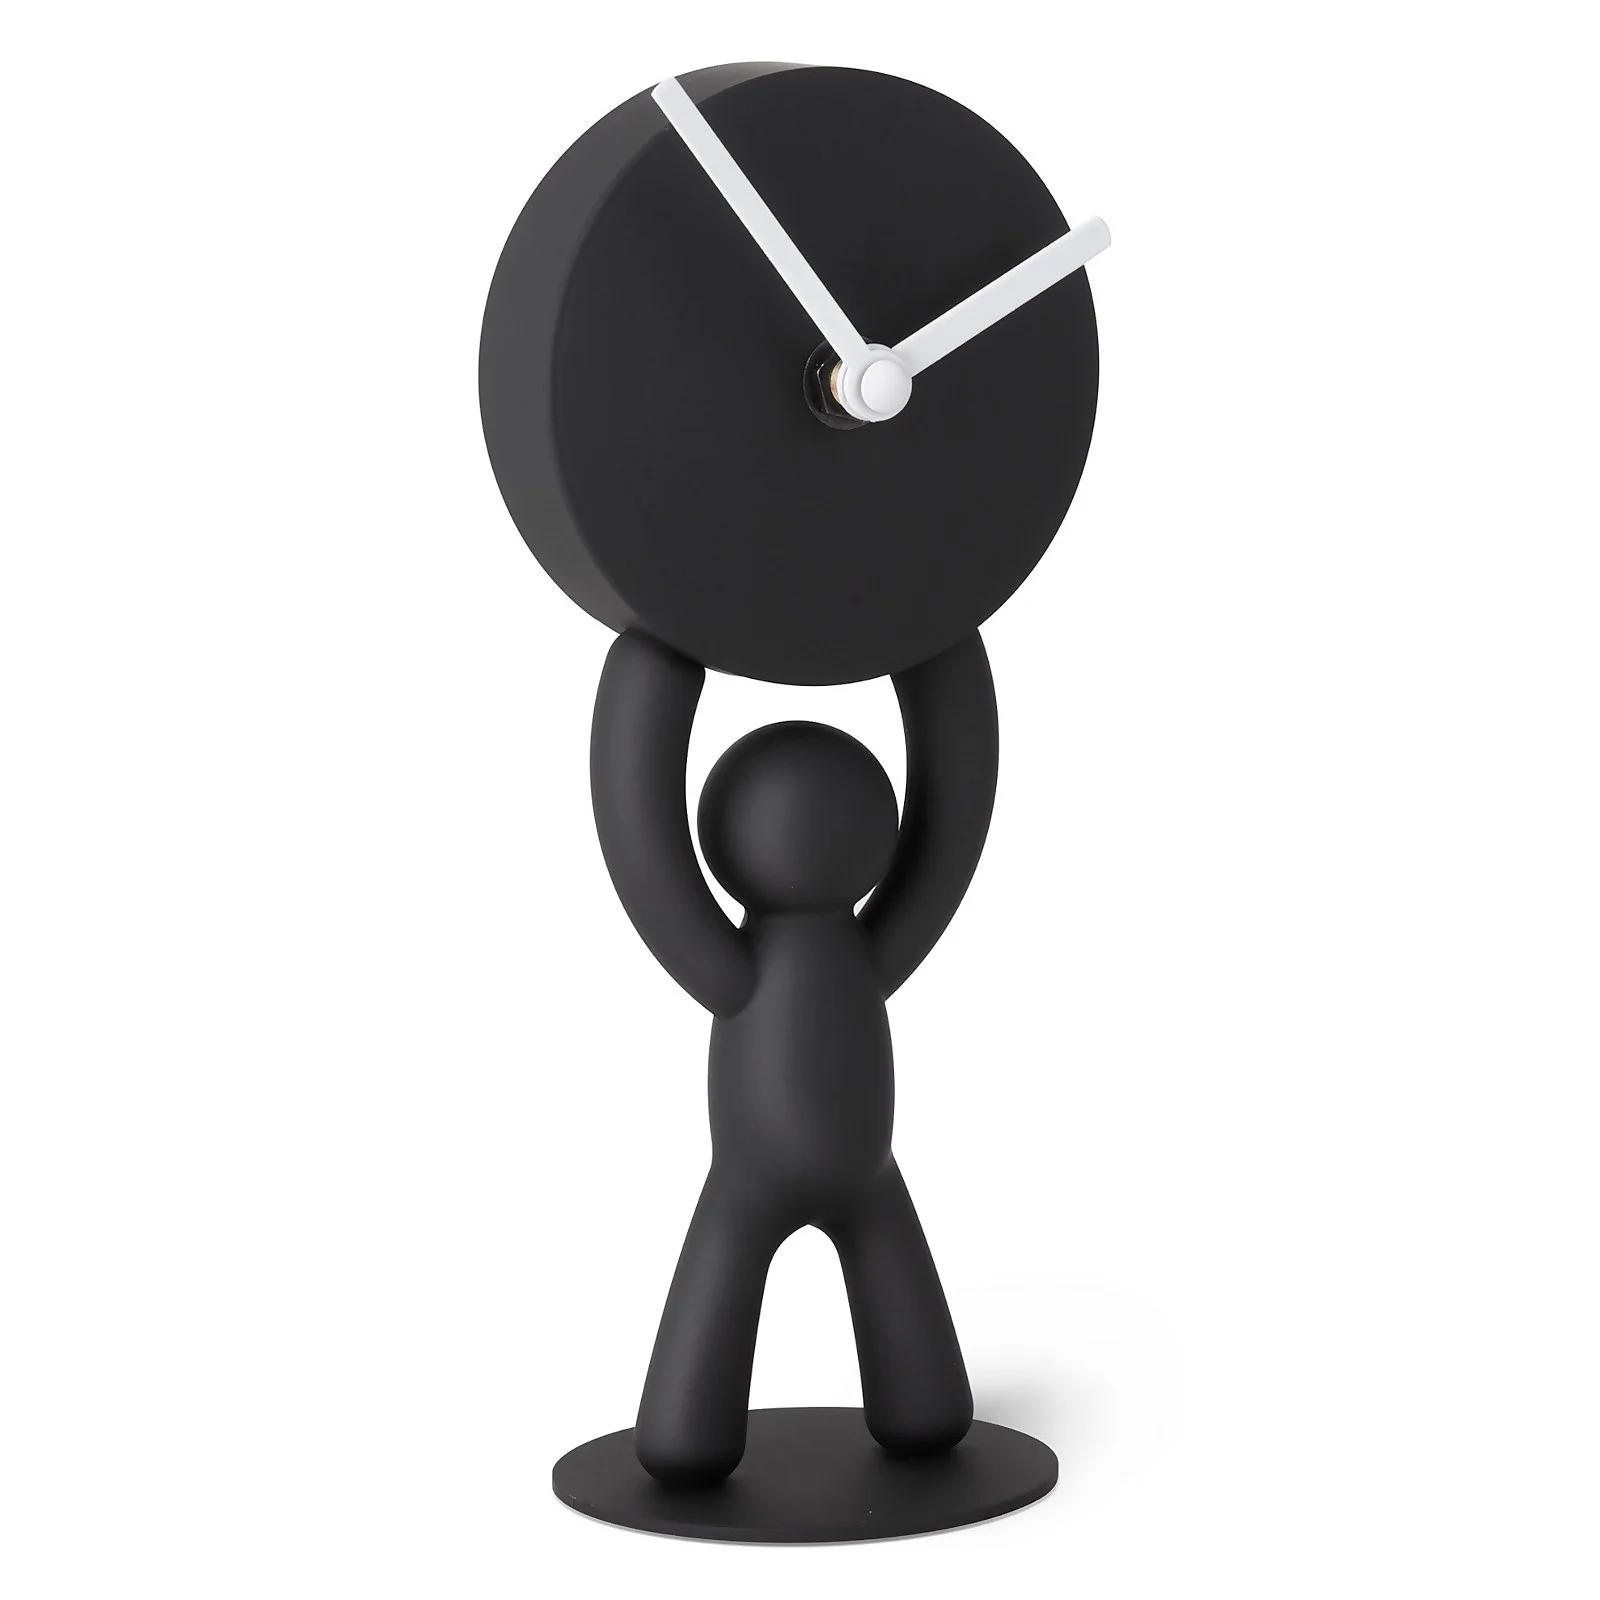 Umbra Buddy Desk Clock - Black Image 1